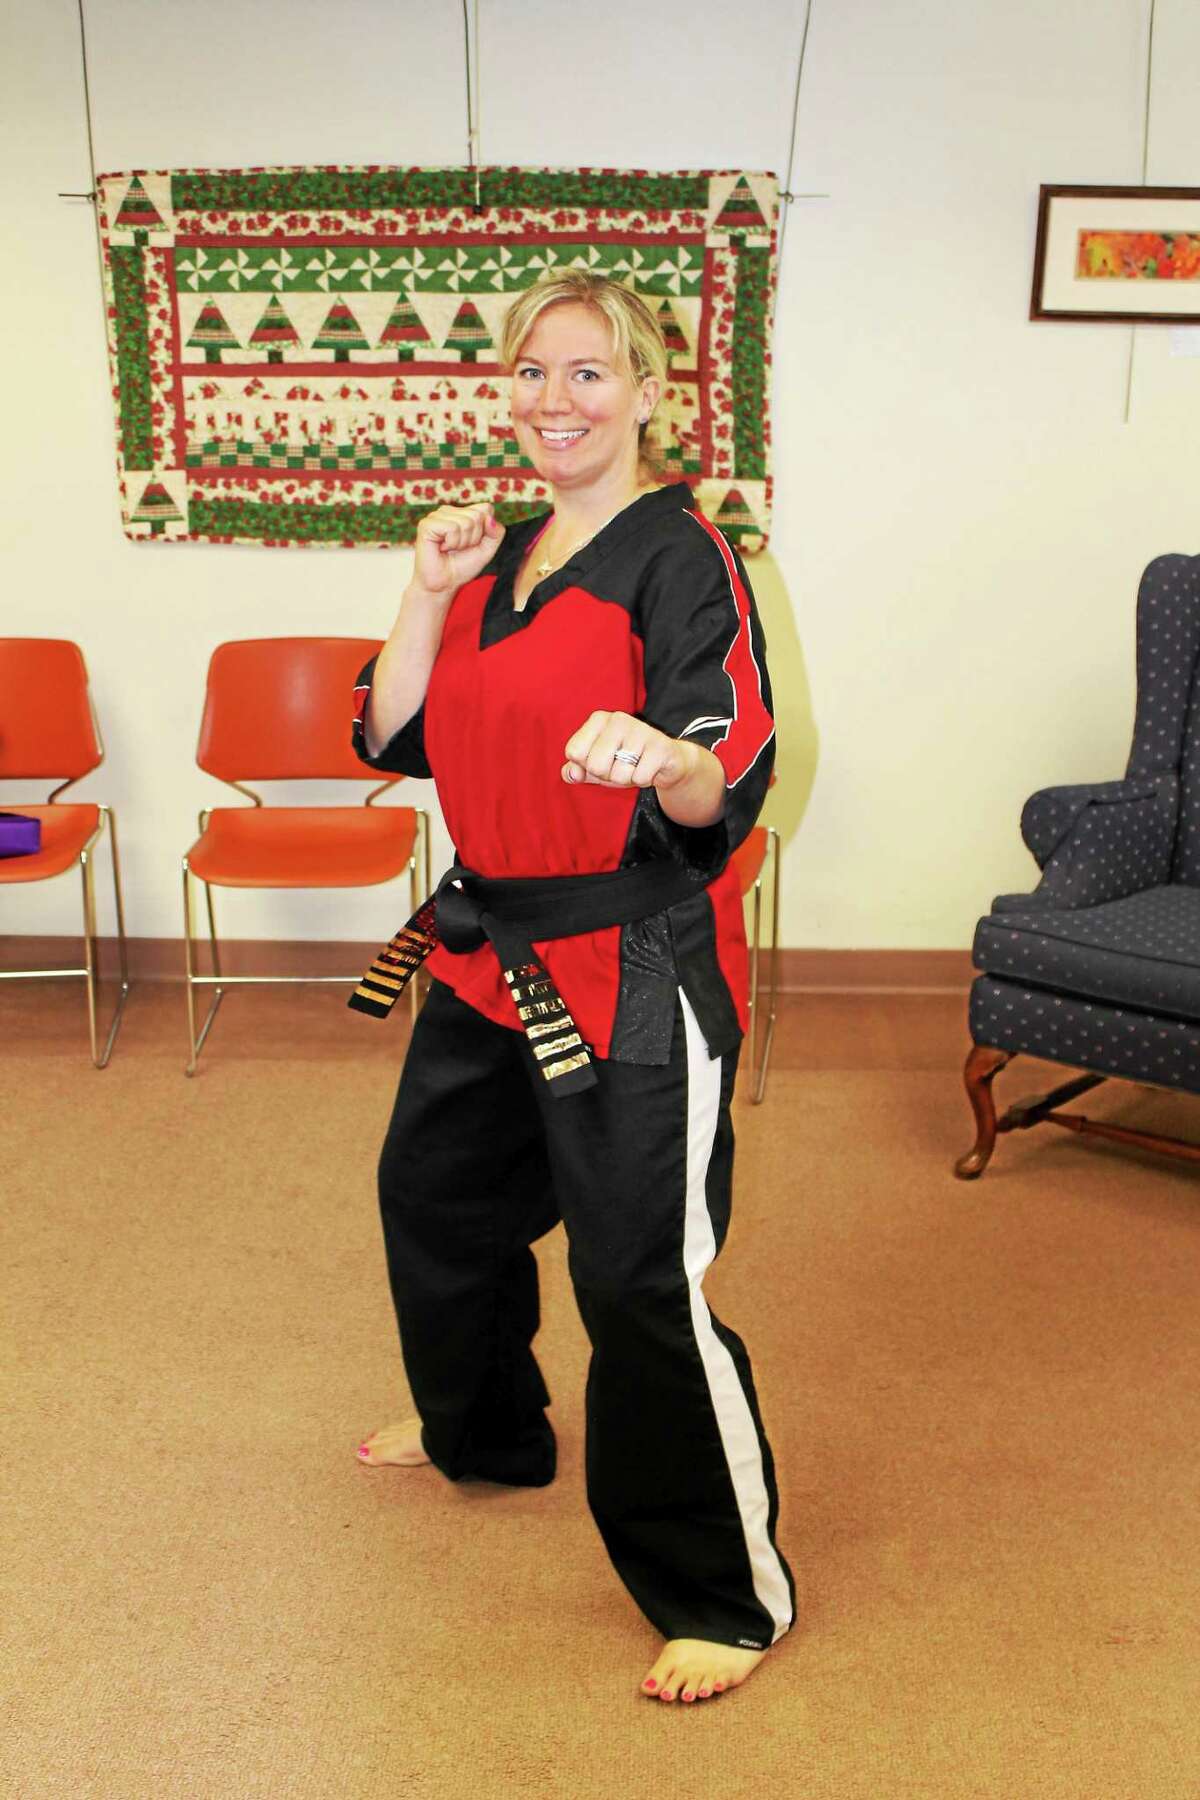 Torrington karate studio teaching confidence, self control